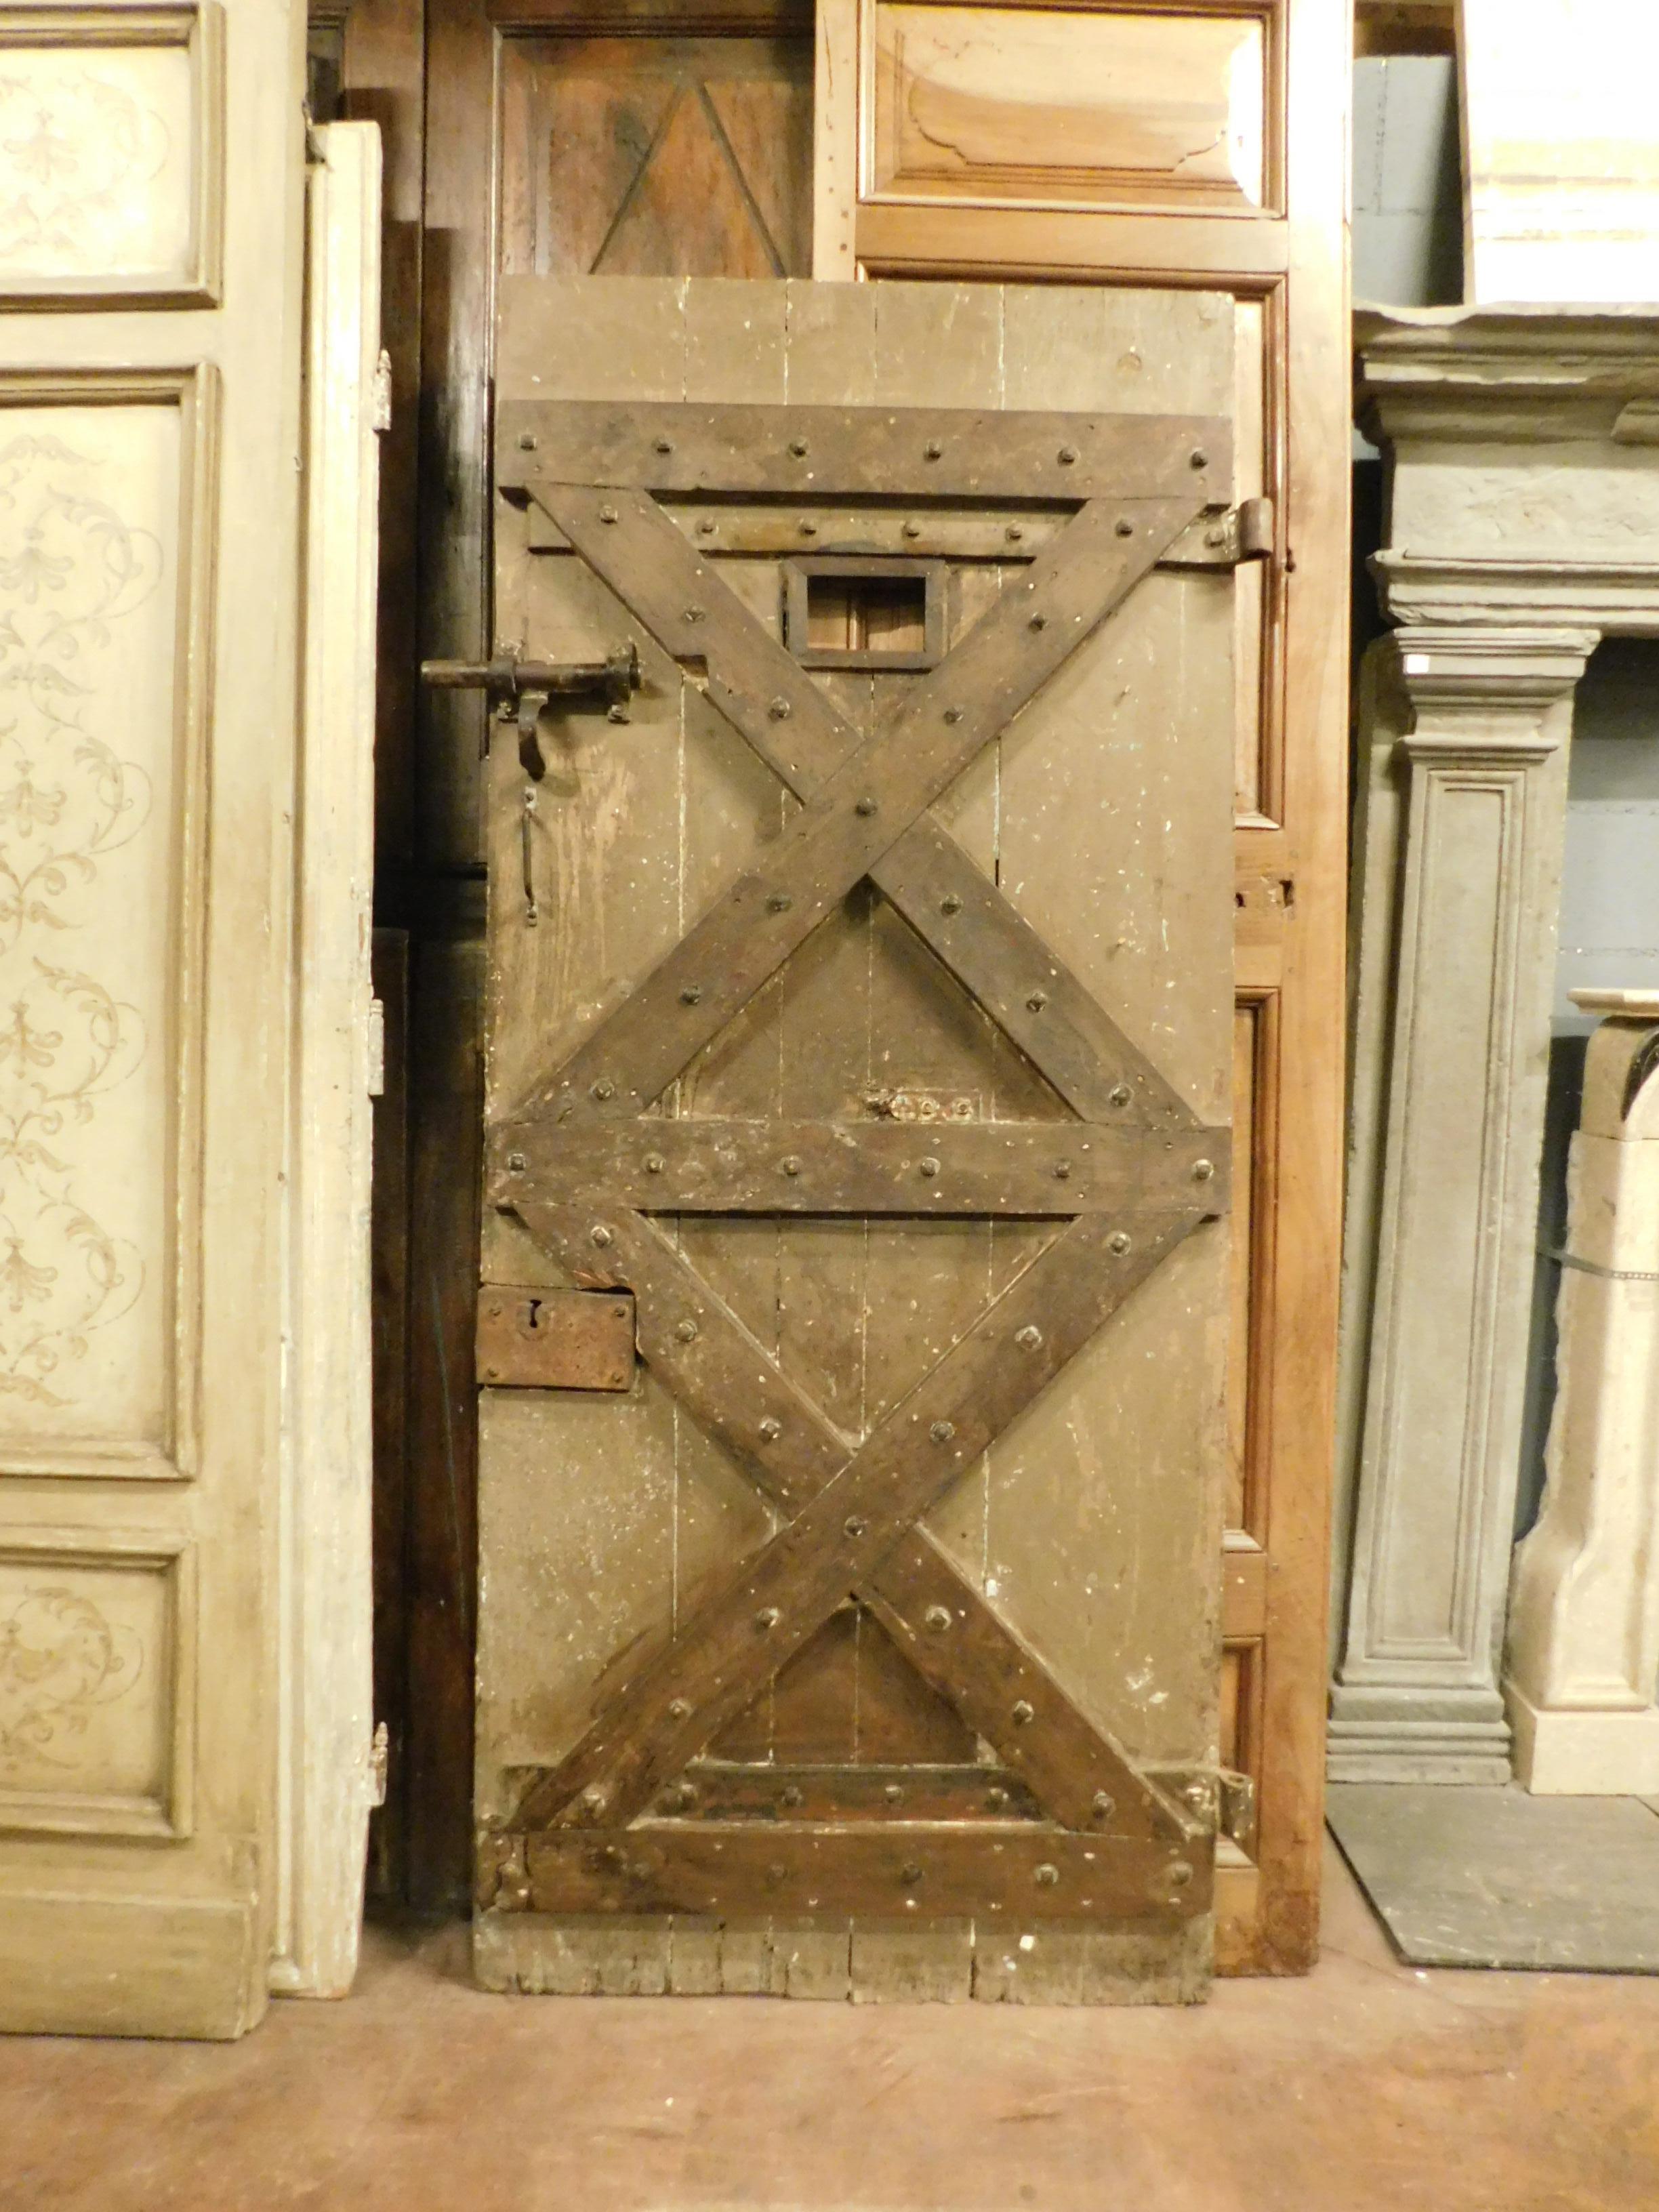 19th century doors